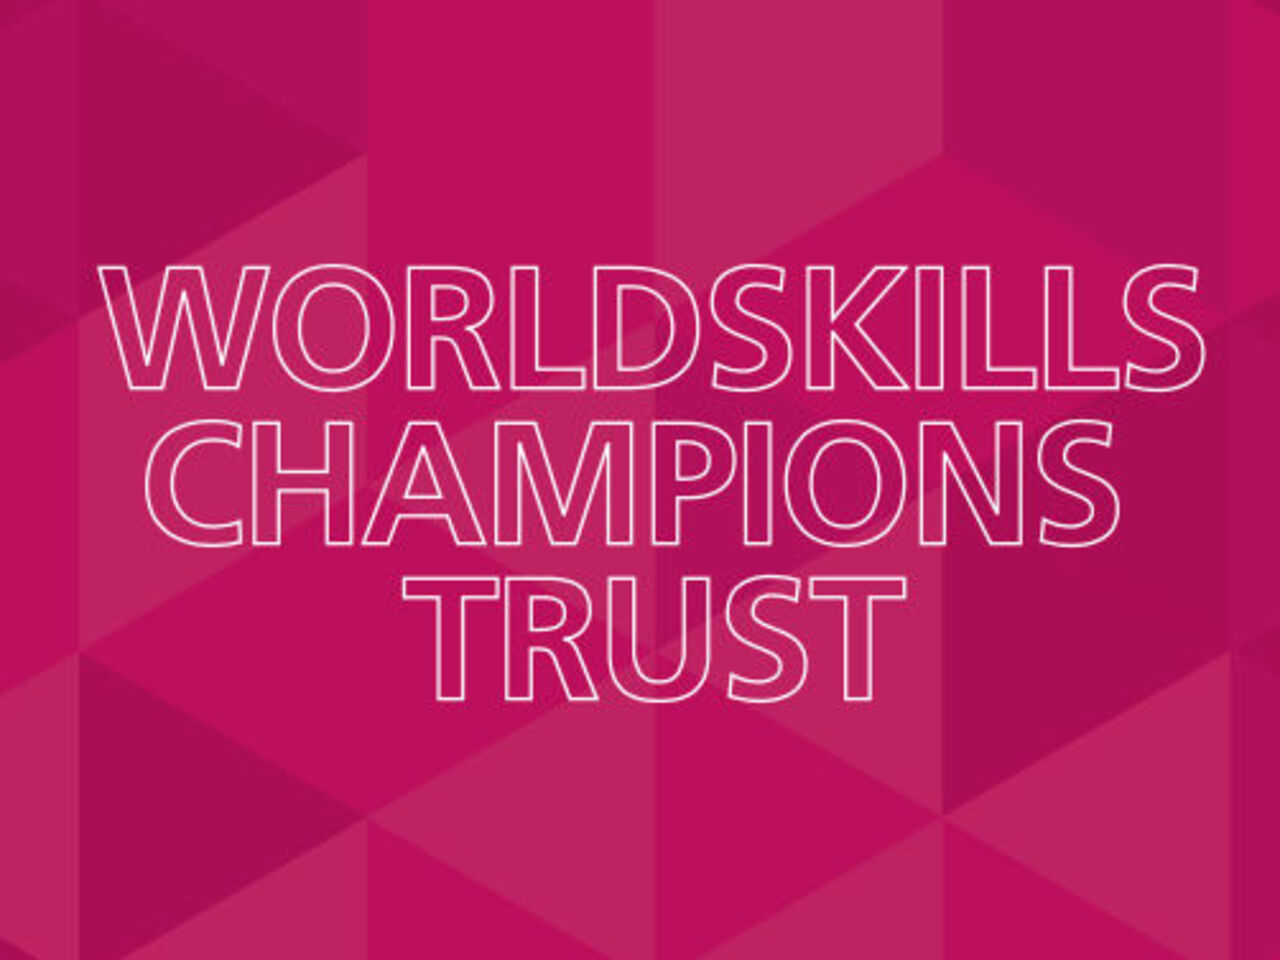 Introducing the new WorldSkills Champions Trust representatives